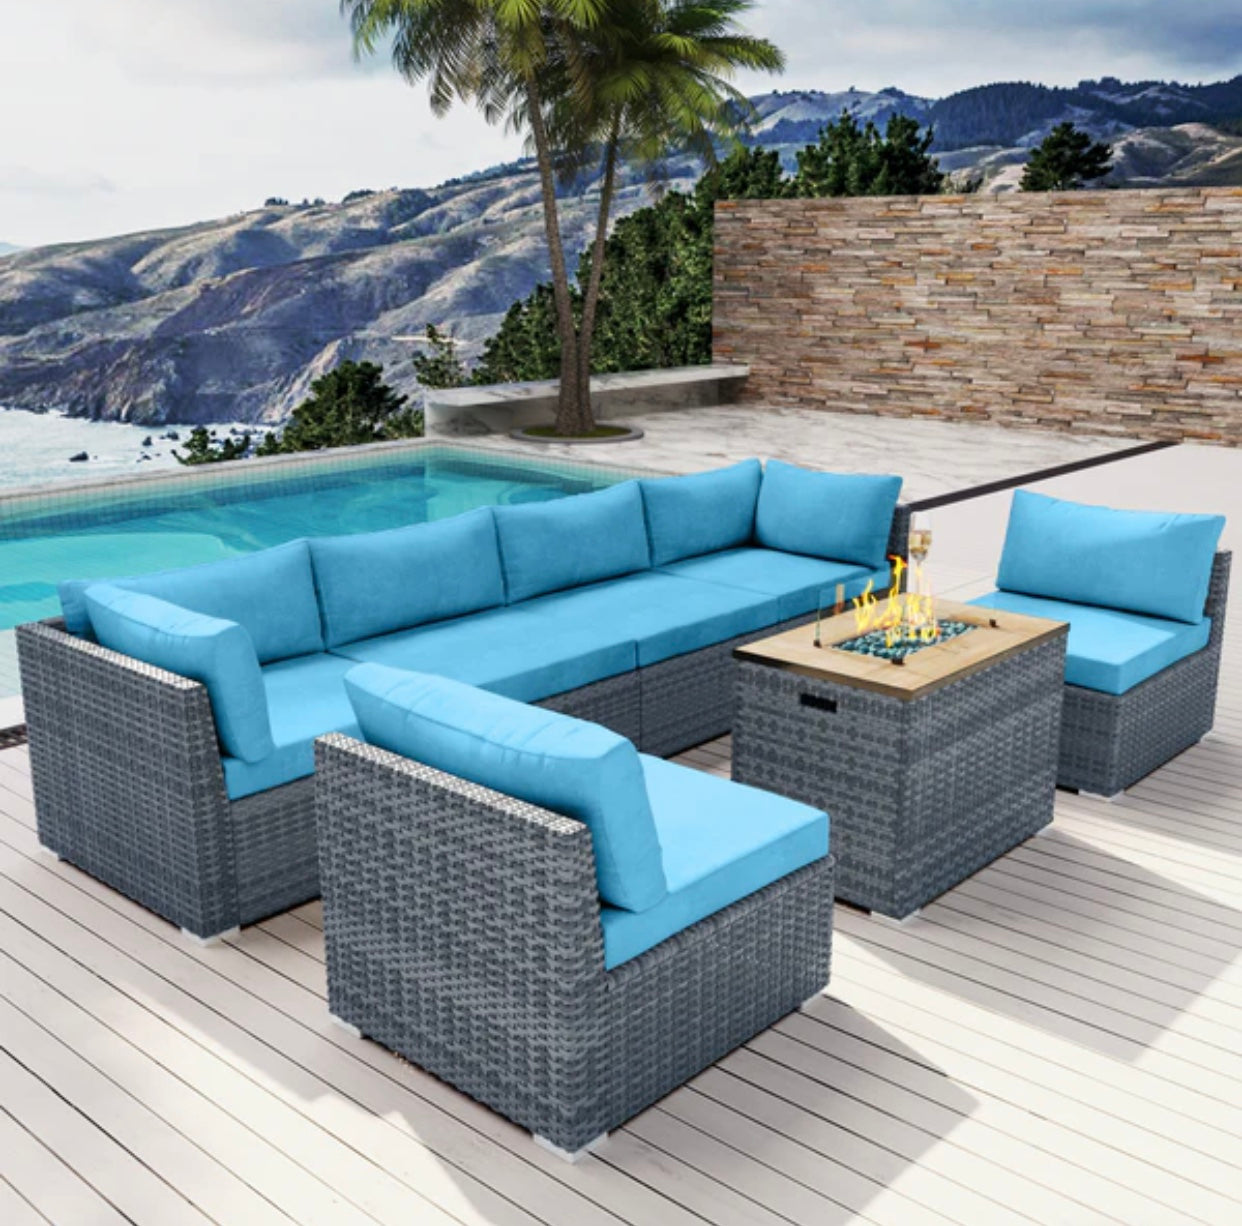 Sky Blue 7 Seven piece Outdoor Patio Furniture with Propane Fire Pit Gray Wicker Santa Monica Beach